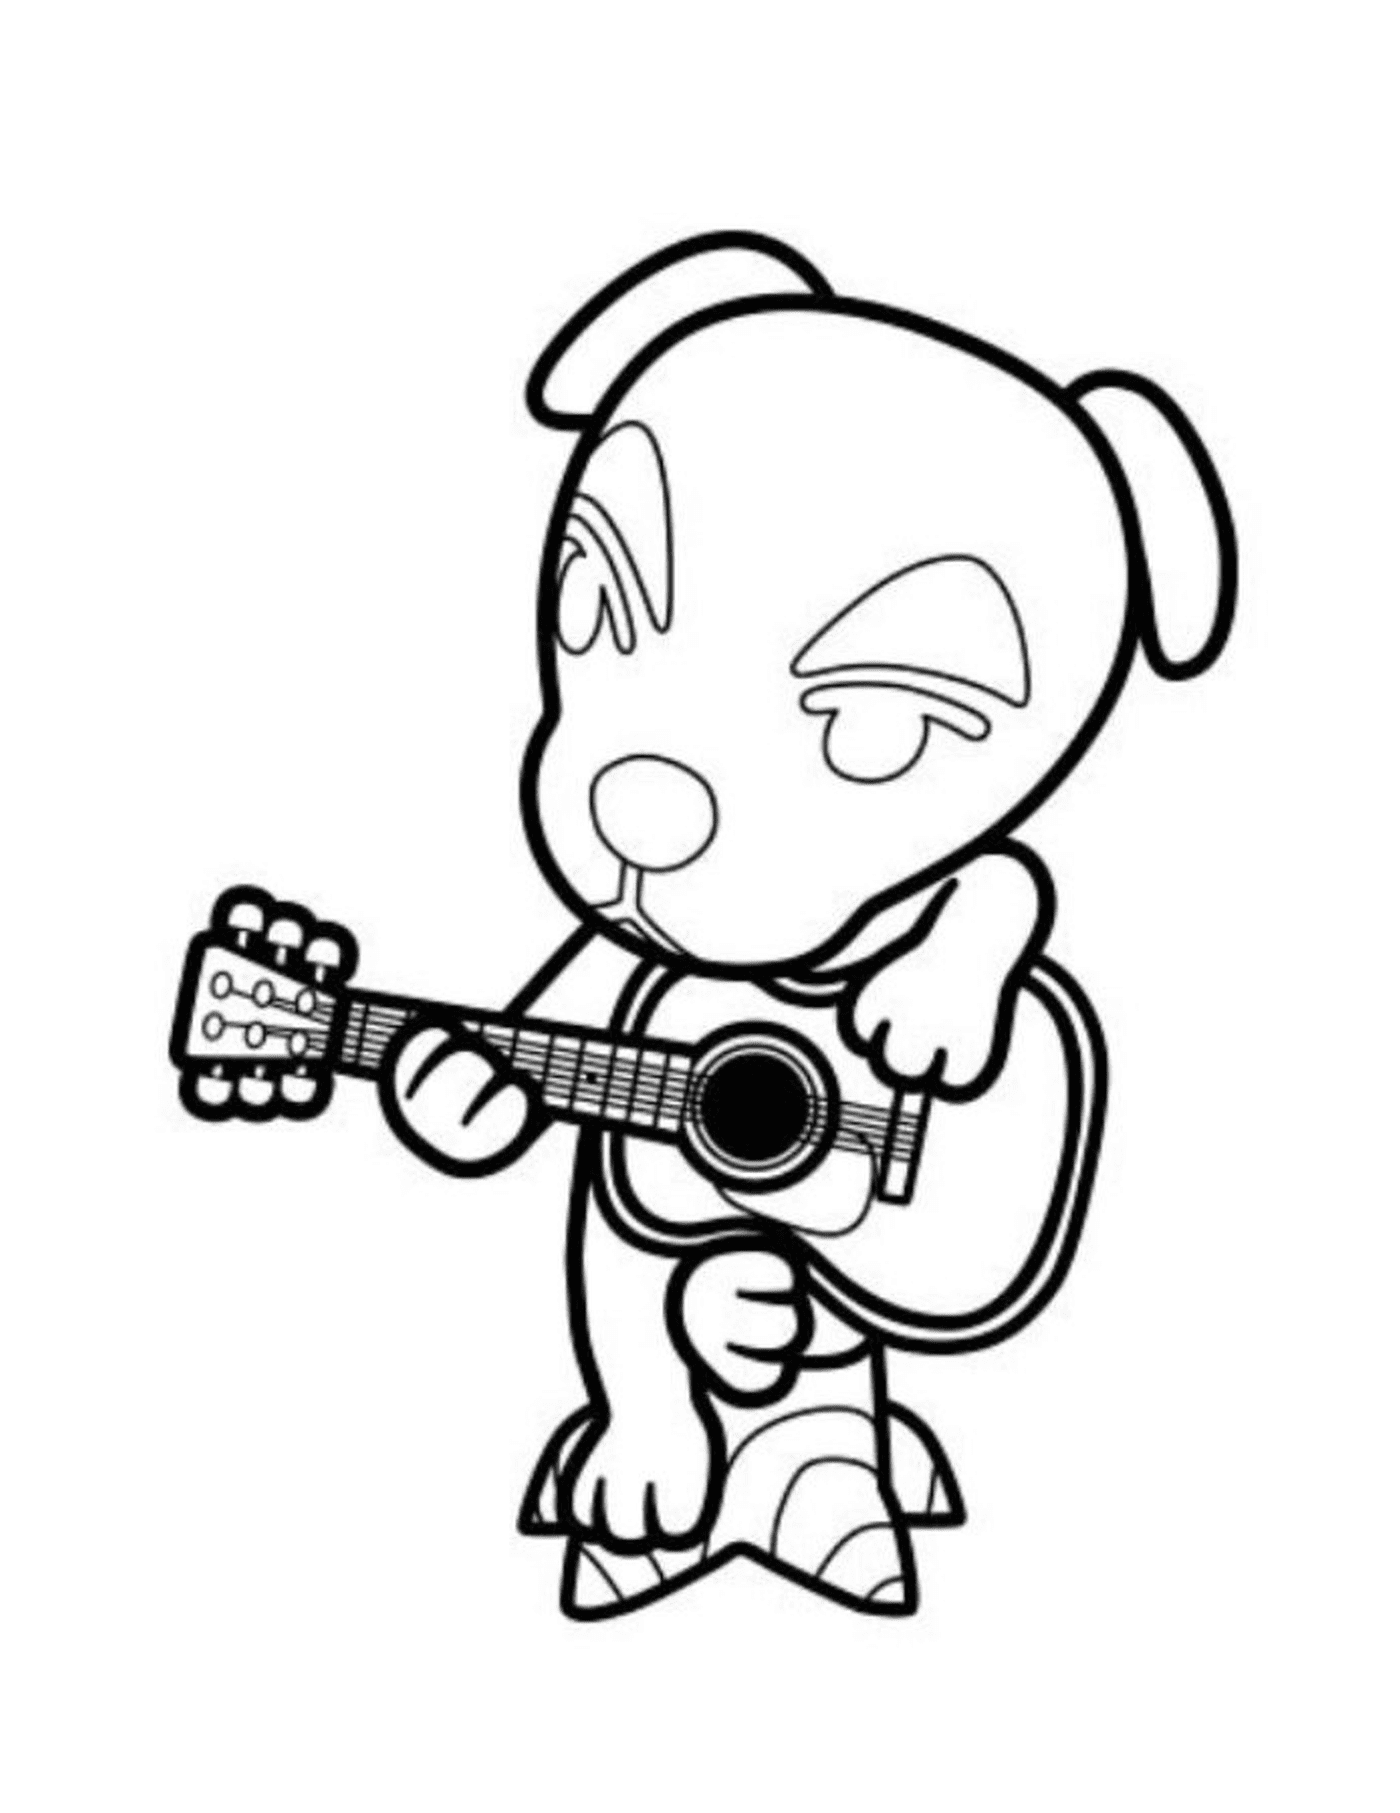  Animal Crossing Dog spielt stehende Gitarre 